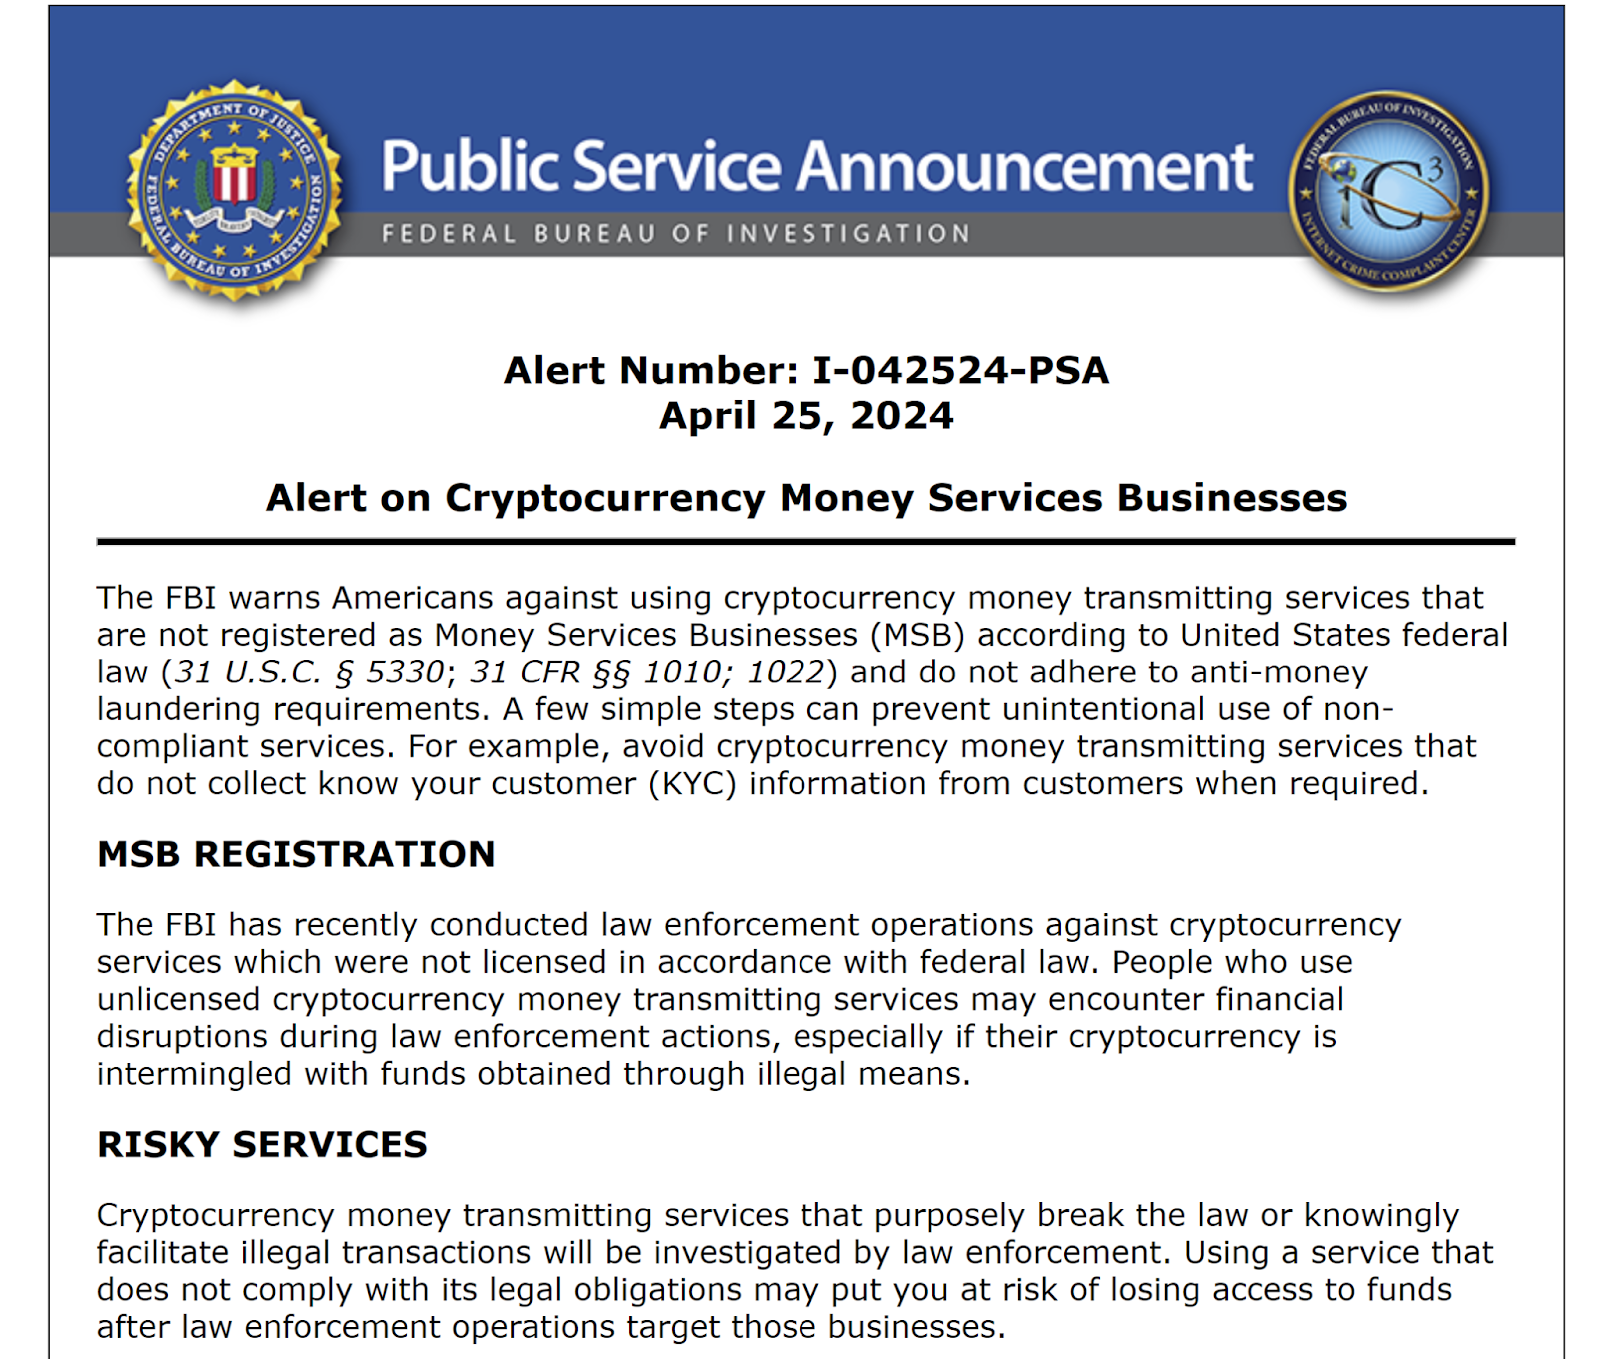 Screenshot of the FBI Alert warning against using unregistered businesses